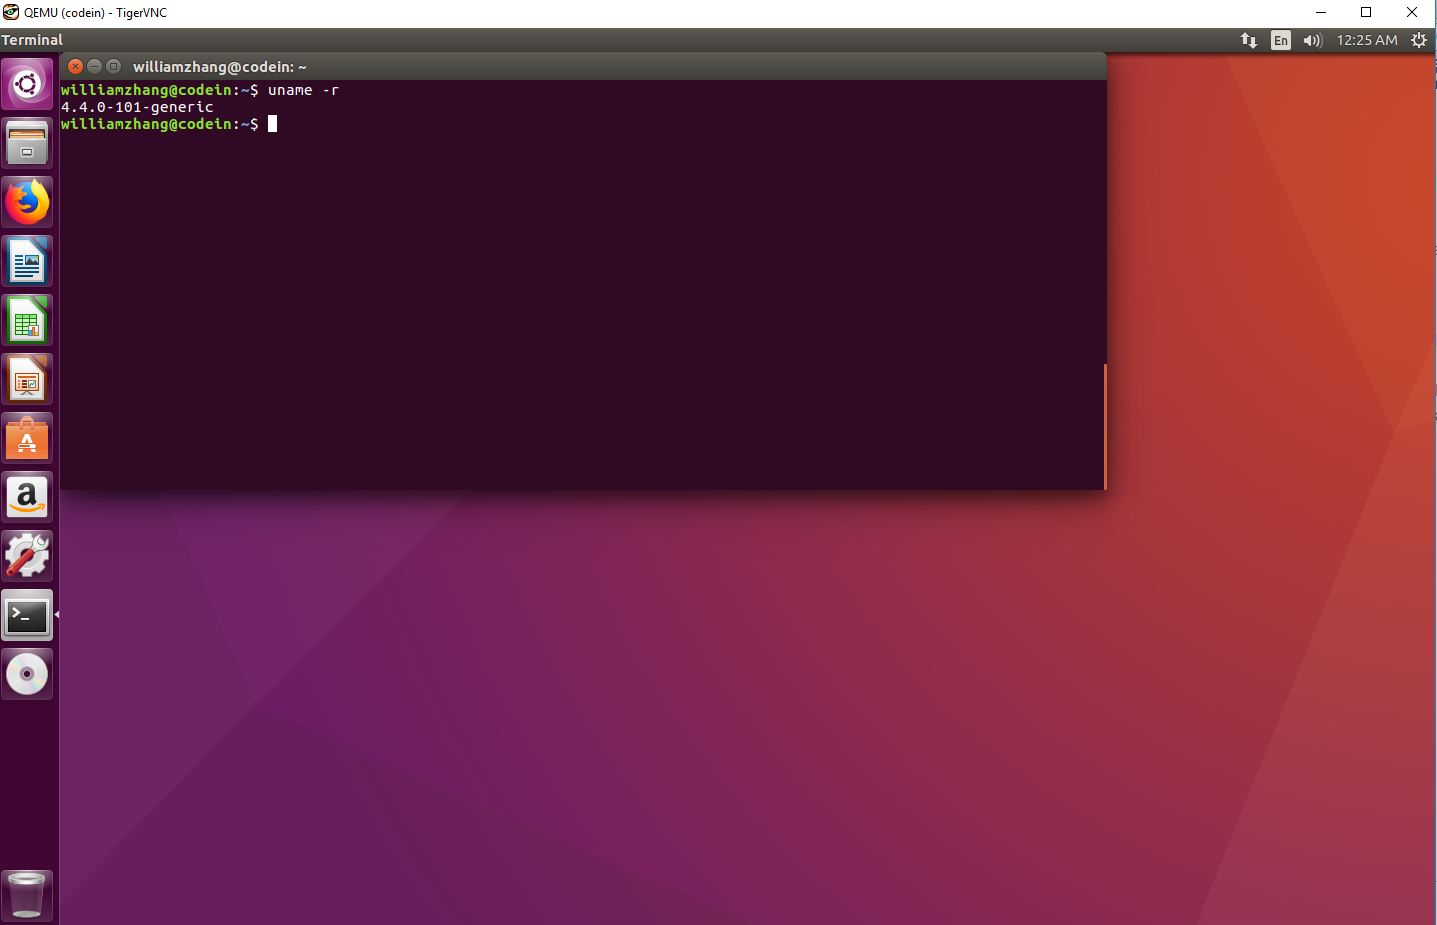 Ubuntu 17.10 Desktop installed